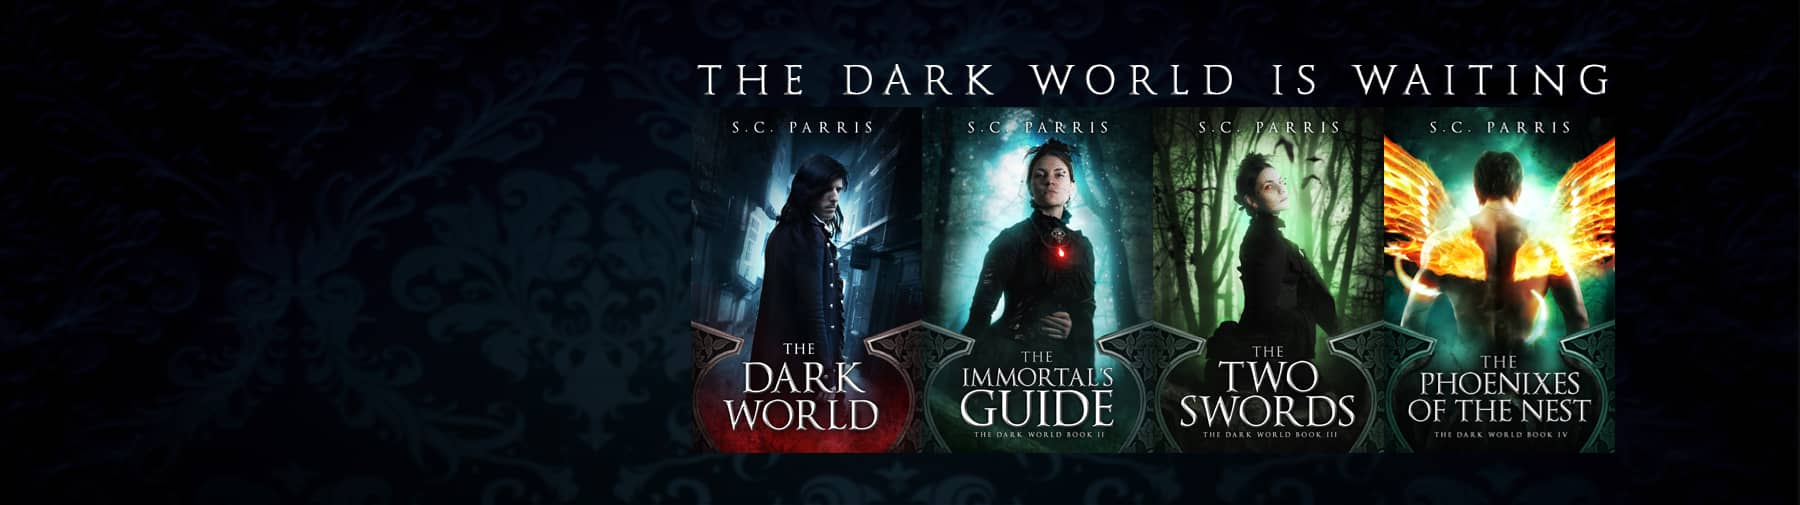 The Dark World series